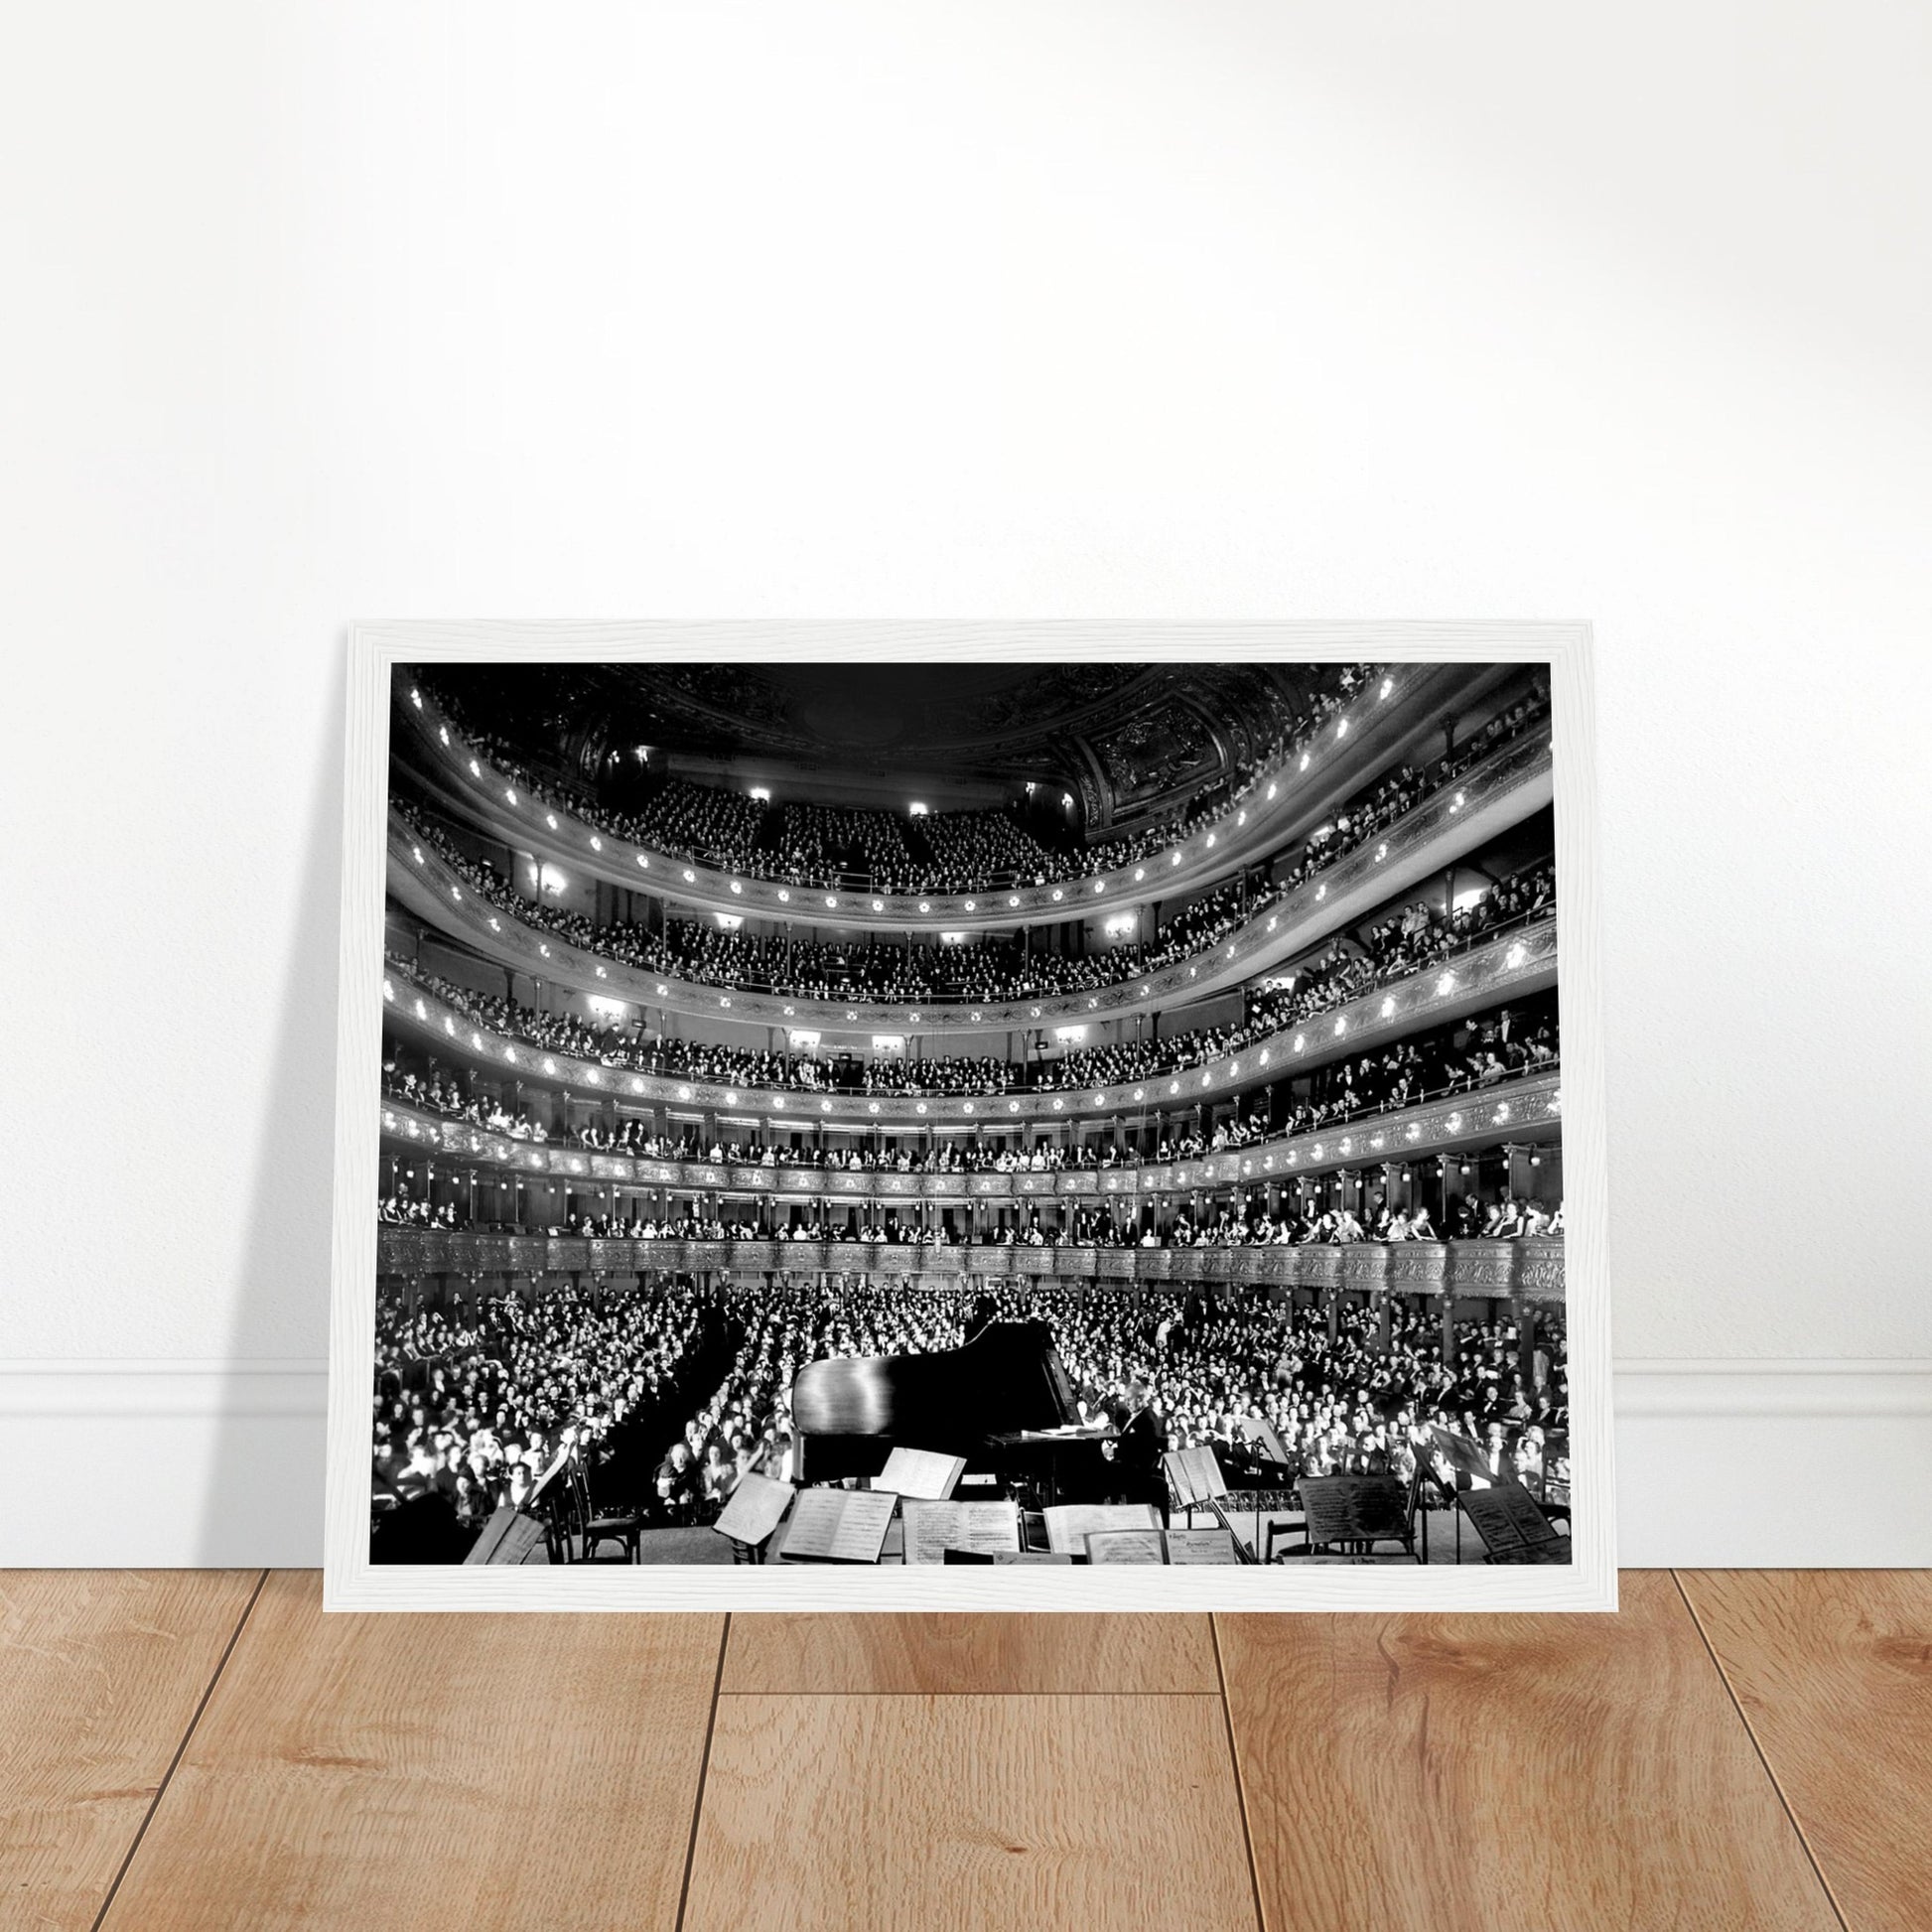 The Former Metropolitan Opera House (39th St) New York City, Piano Concert by Josef Hofmann - Posterify